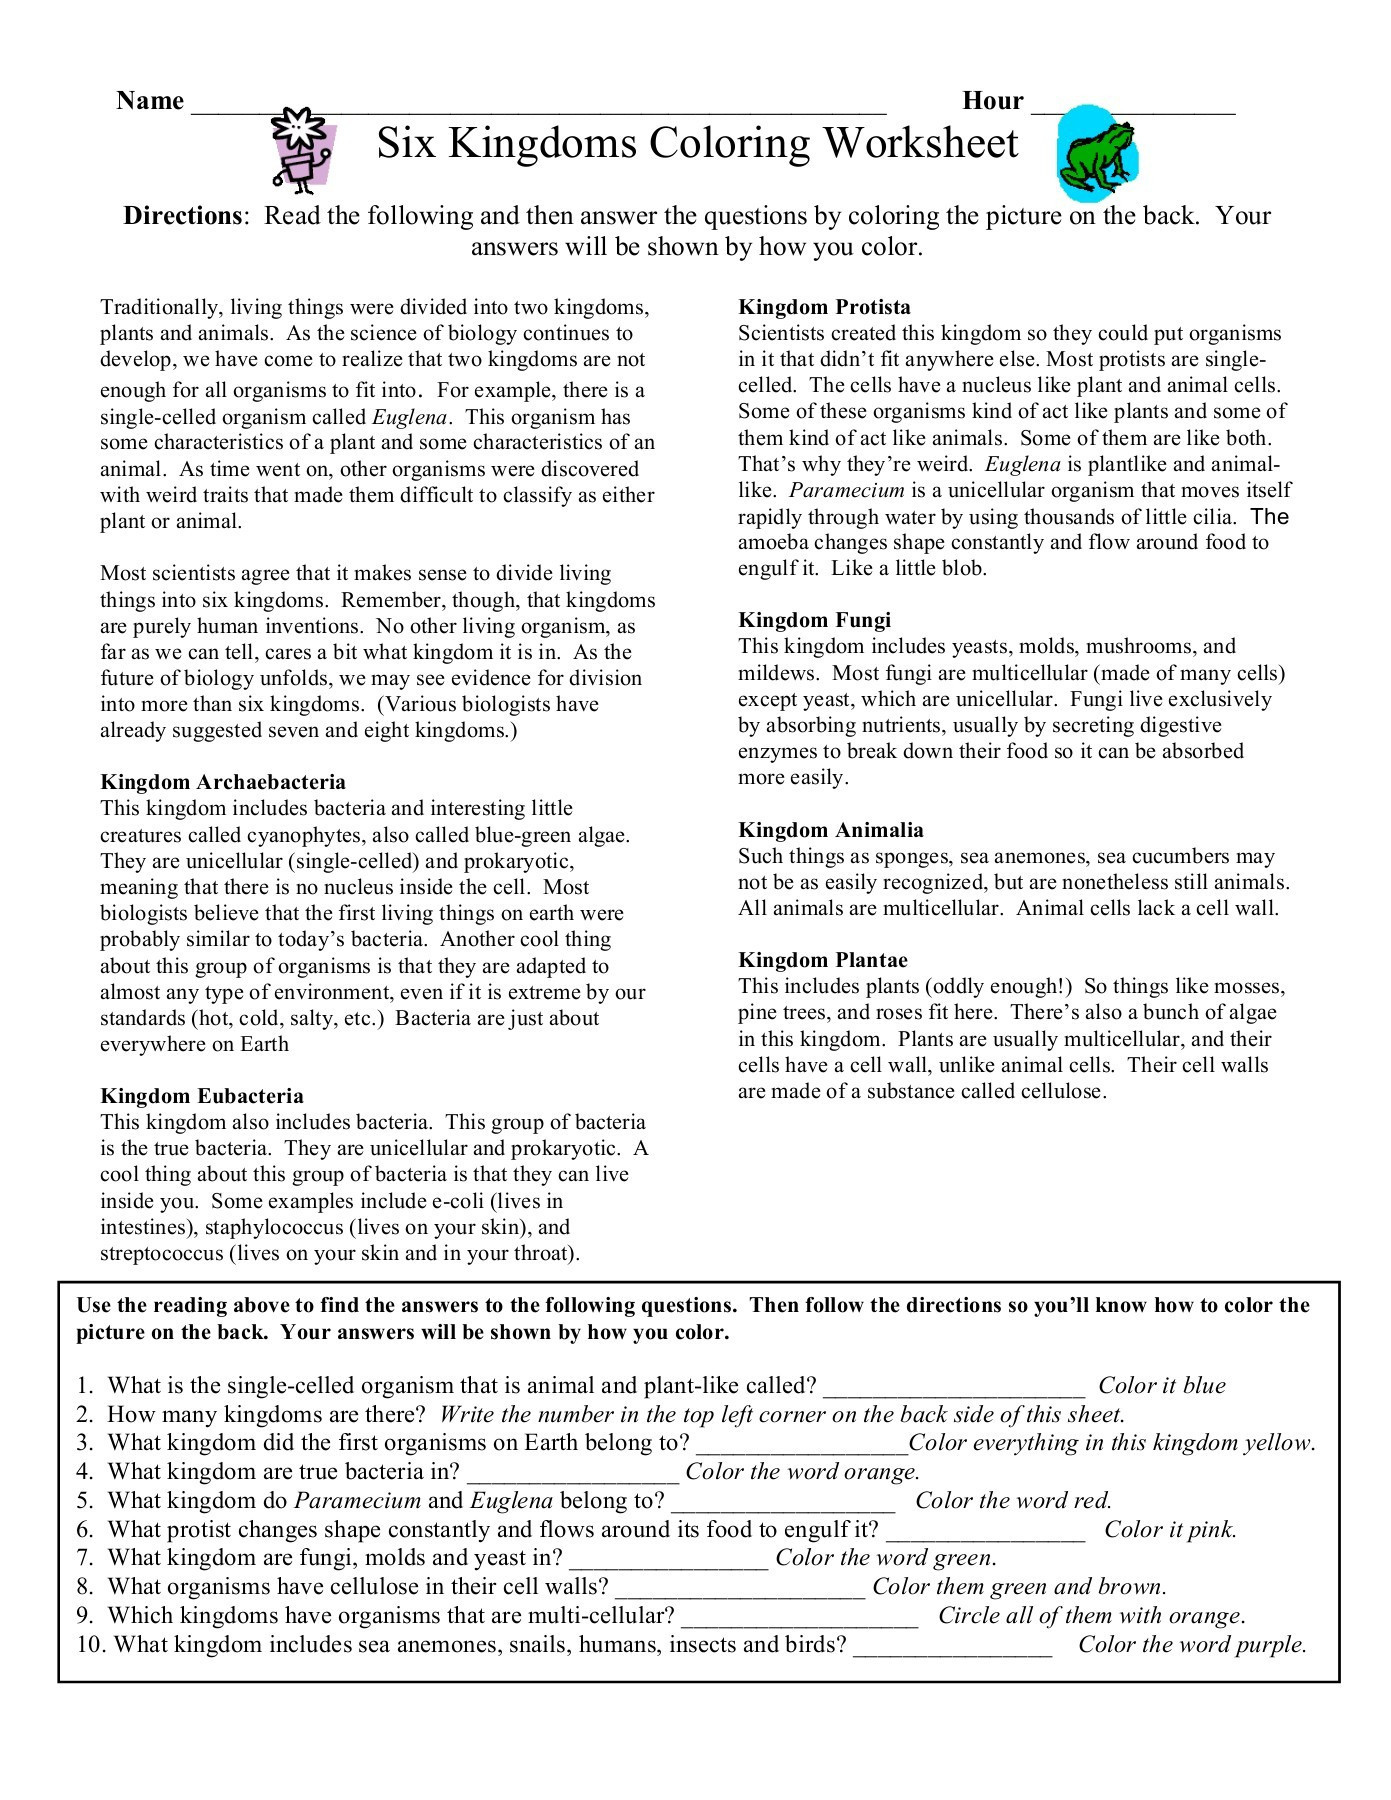 Domains and Kingdoms Worksheet Kingdom Bacteria Worksheets